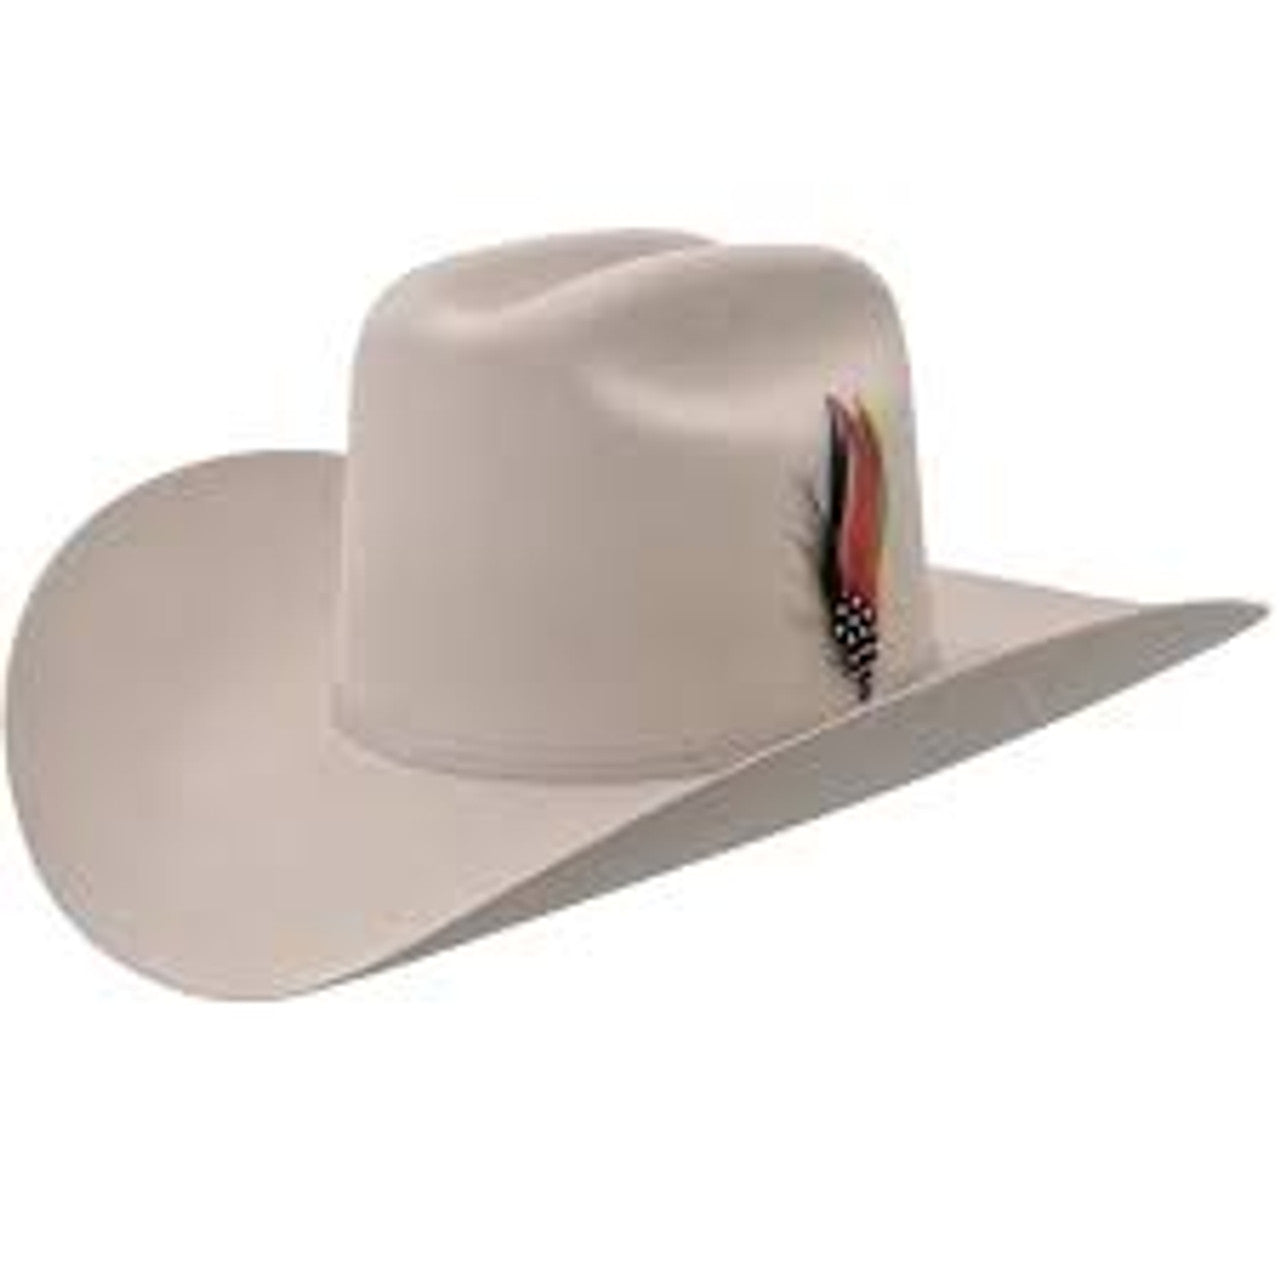 Stetson 6x Rancher Cowboy Felt Hat Silverbelly